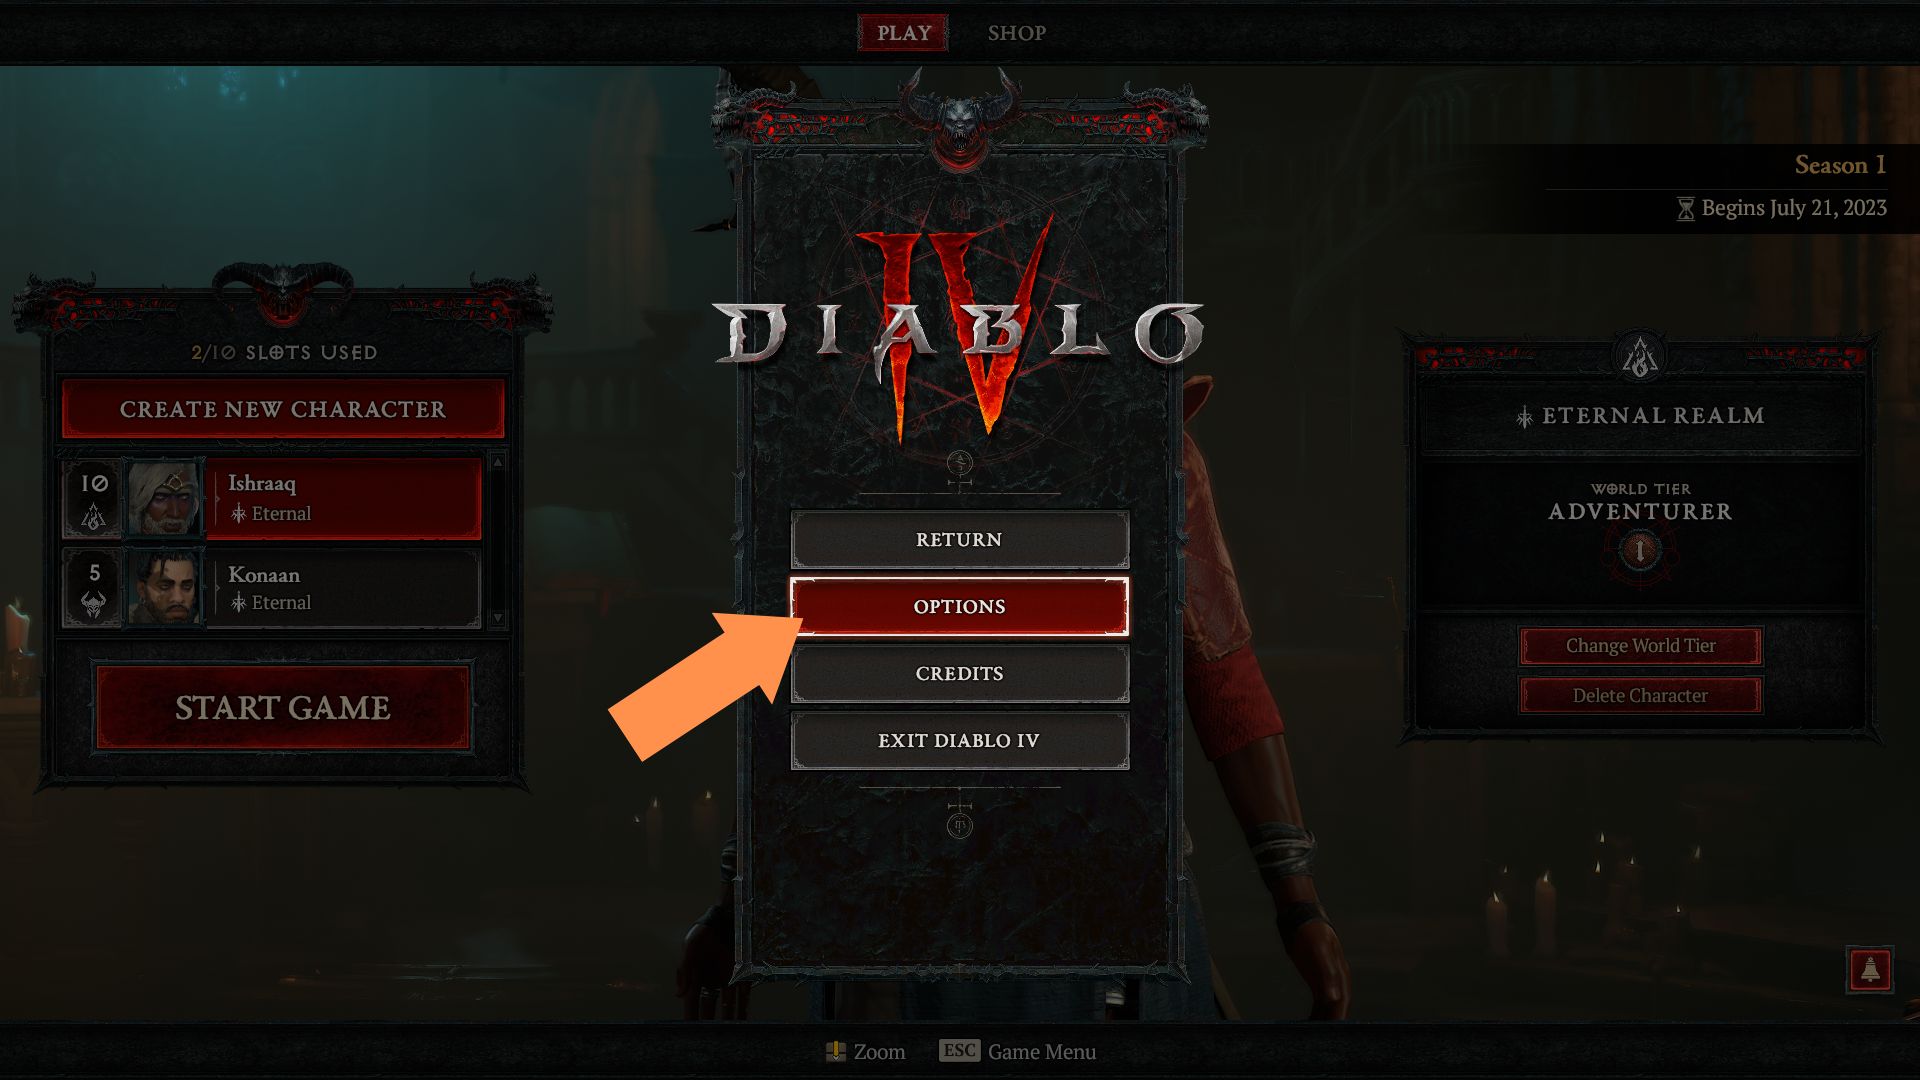 A screenshot of the Diablo IV main screen